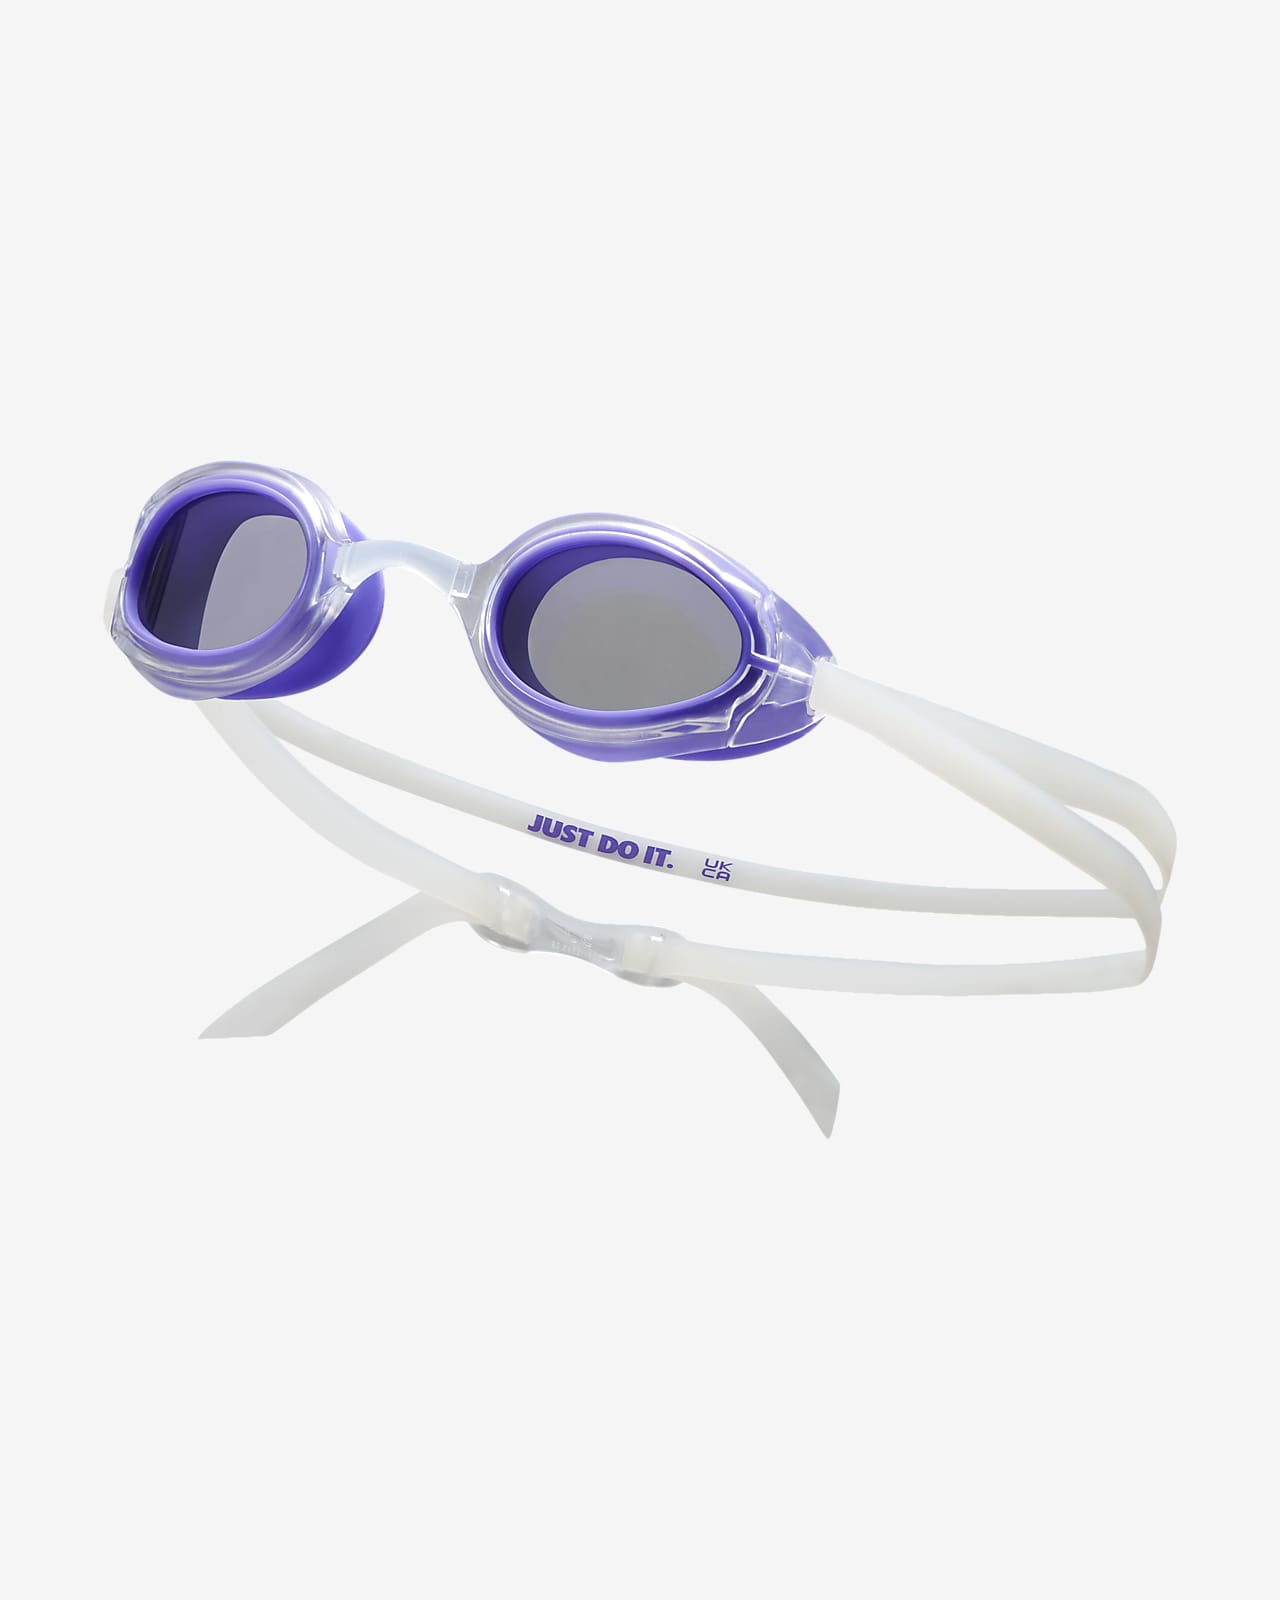 Nike Vapor Photochromic Swim Goggles